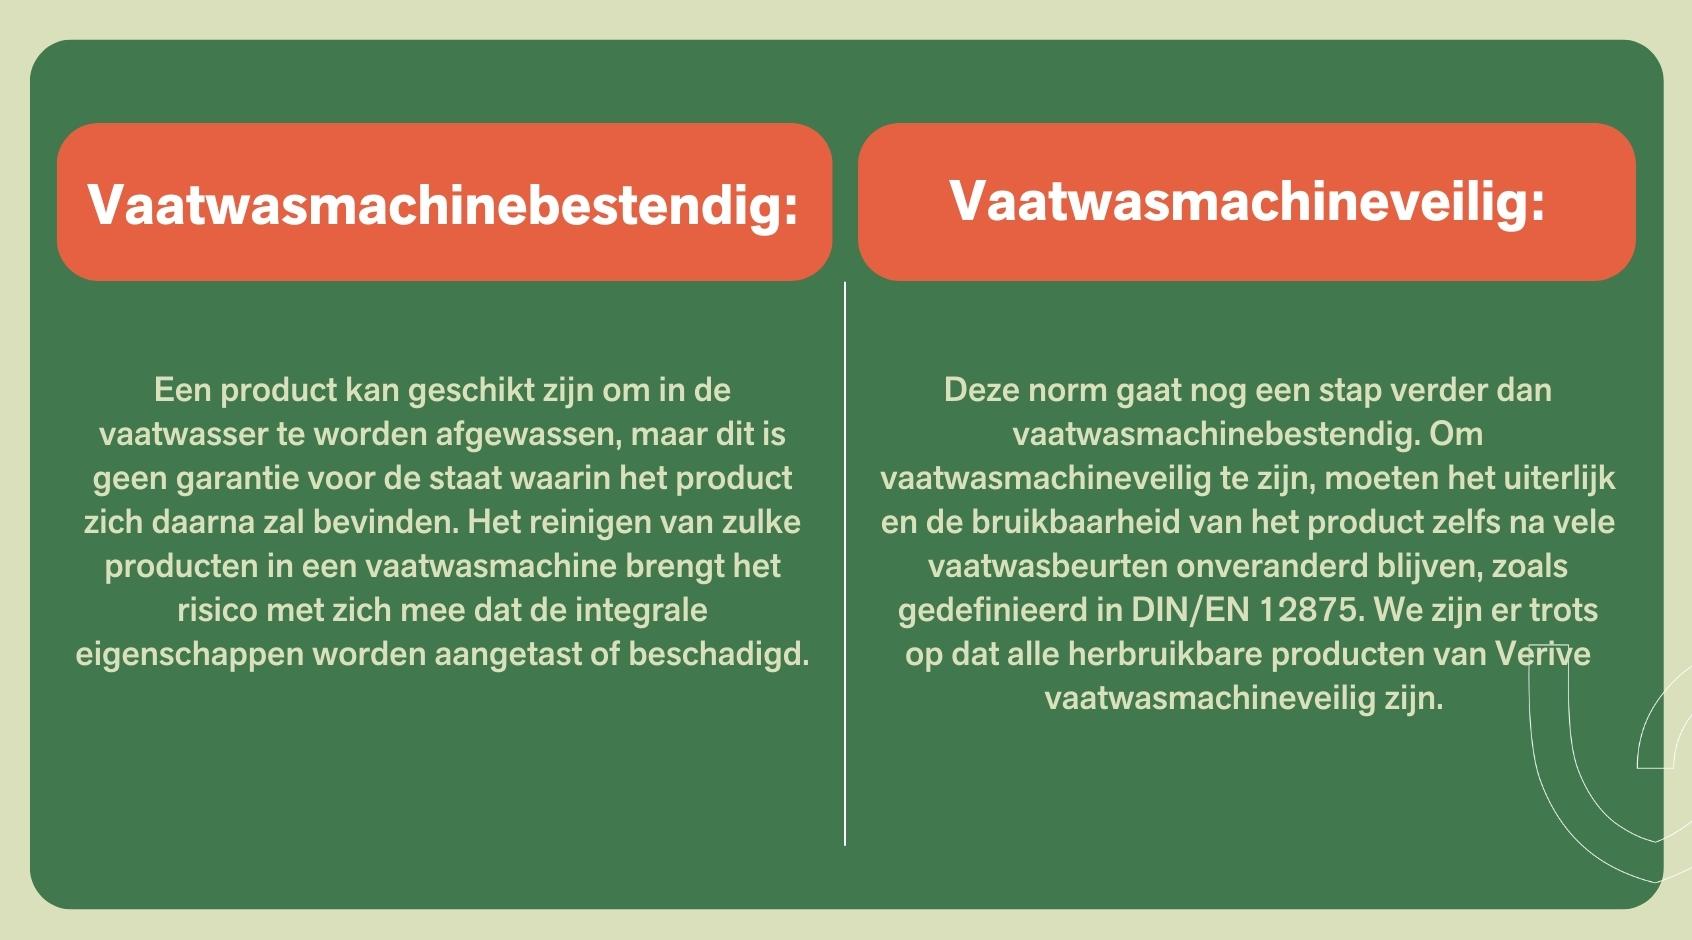 Vaatwasmachinebestendig vs. Vaatwasmachineveilig